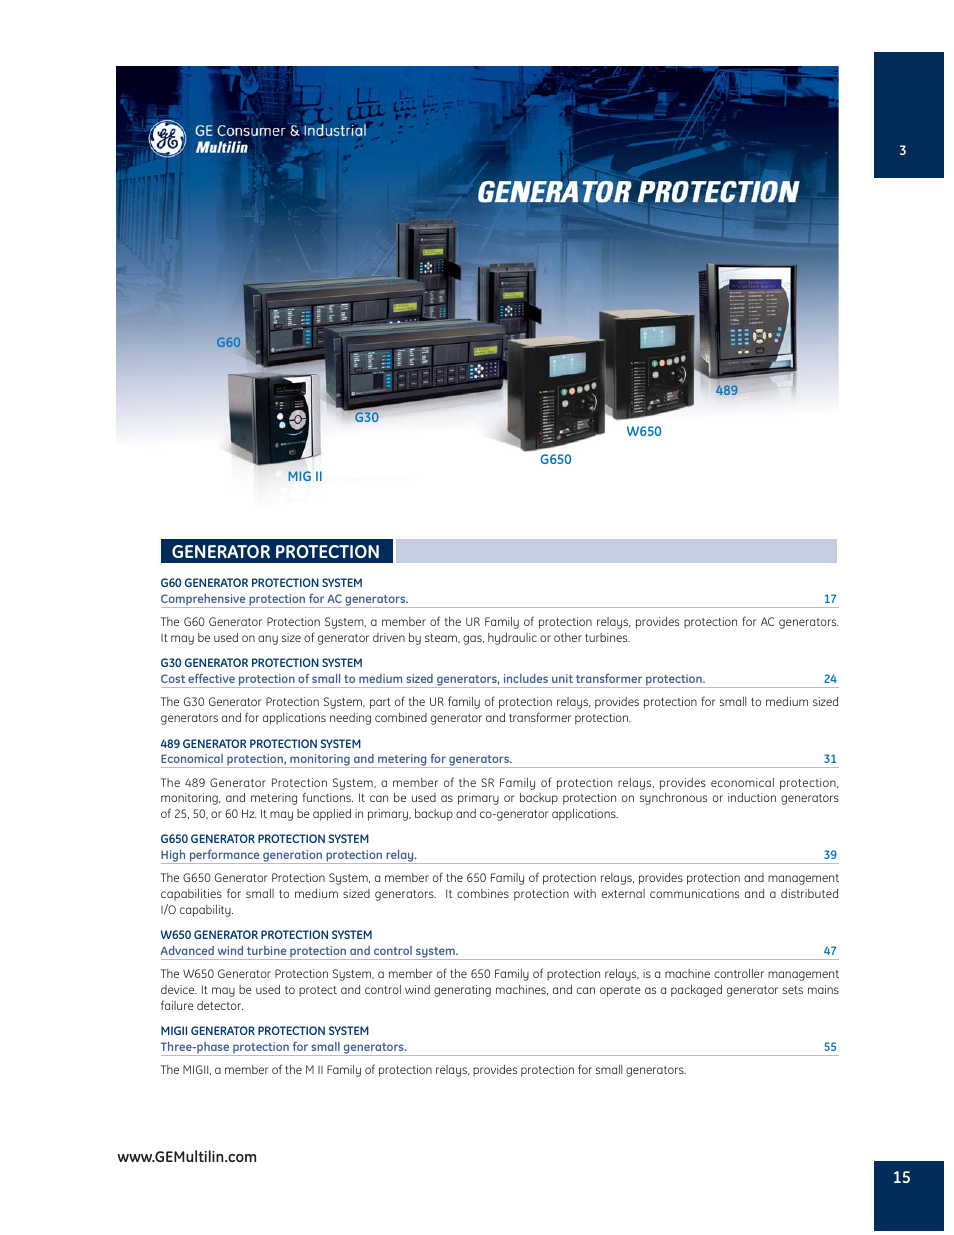 Generator Protection MIGII